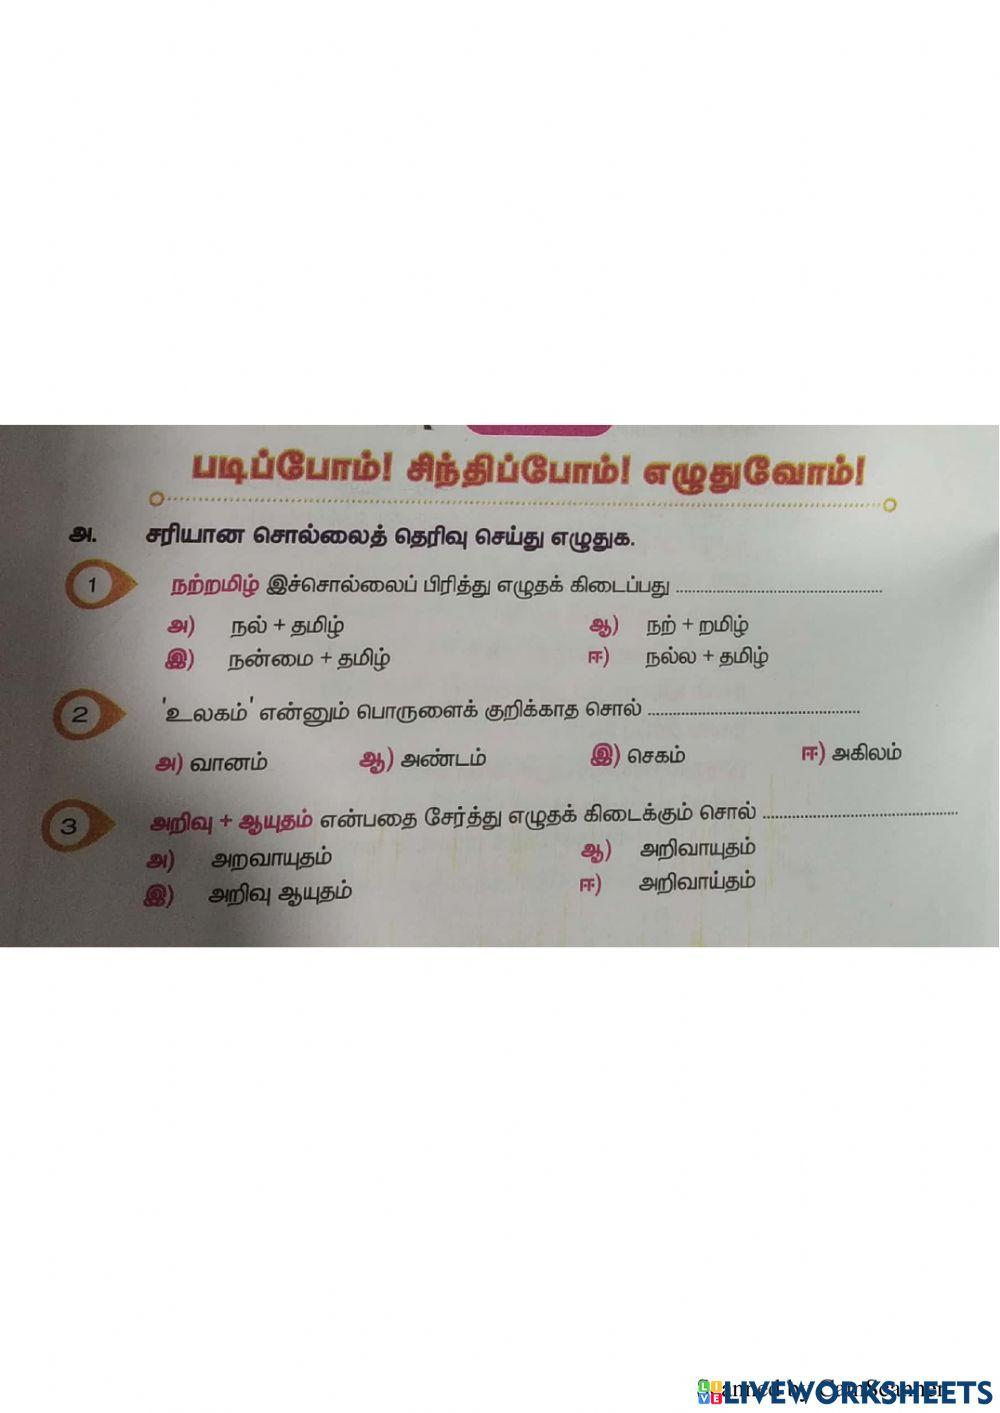 Class:5 first term : tamil worksheet : prepared by r.kumanan, senthil middle school, keppurengan patty